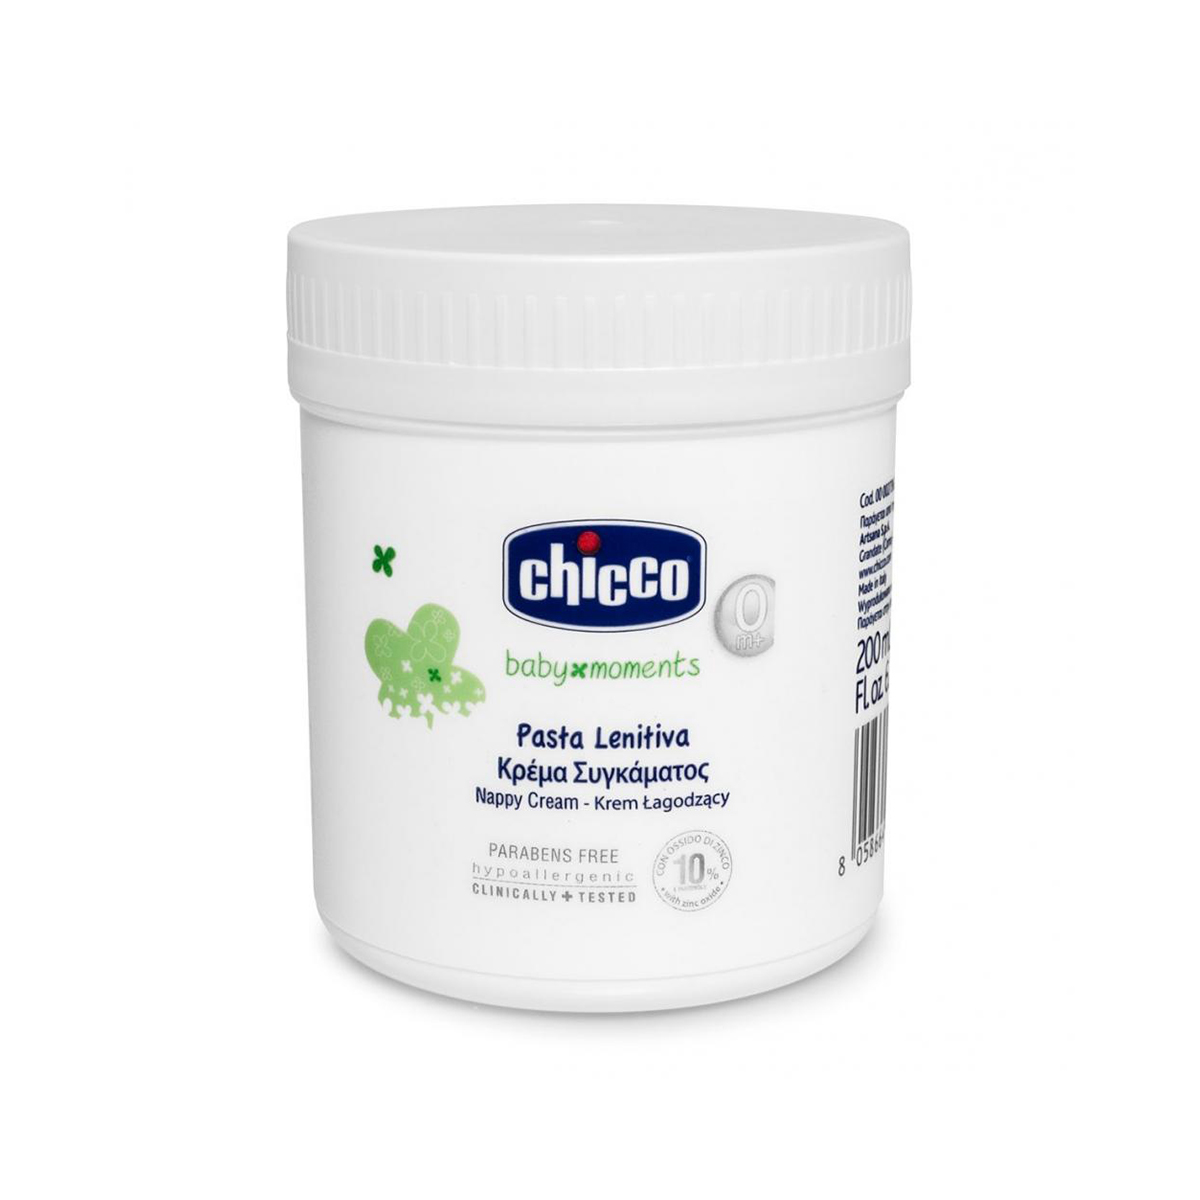 Crema anti-iritatii pentru scutec cu panthenol si oxid de zinc, Chicco, 200 ml imagine